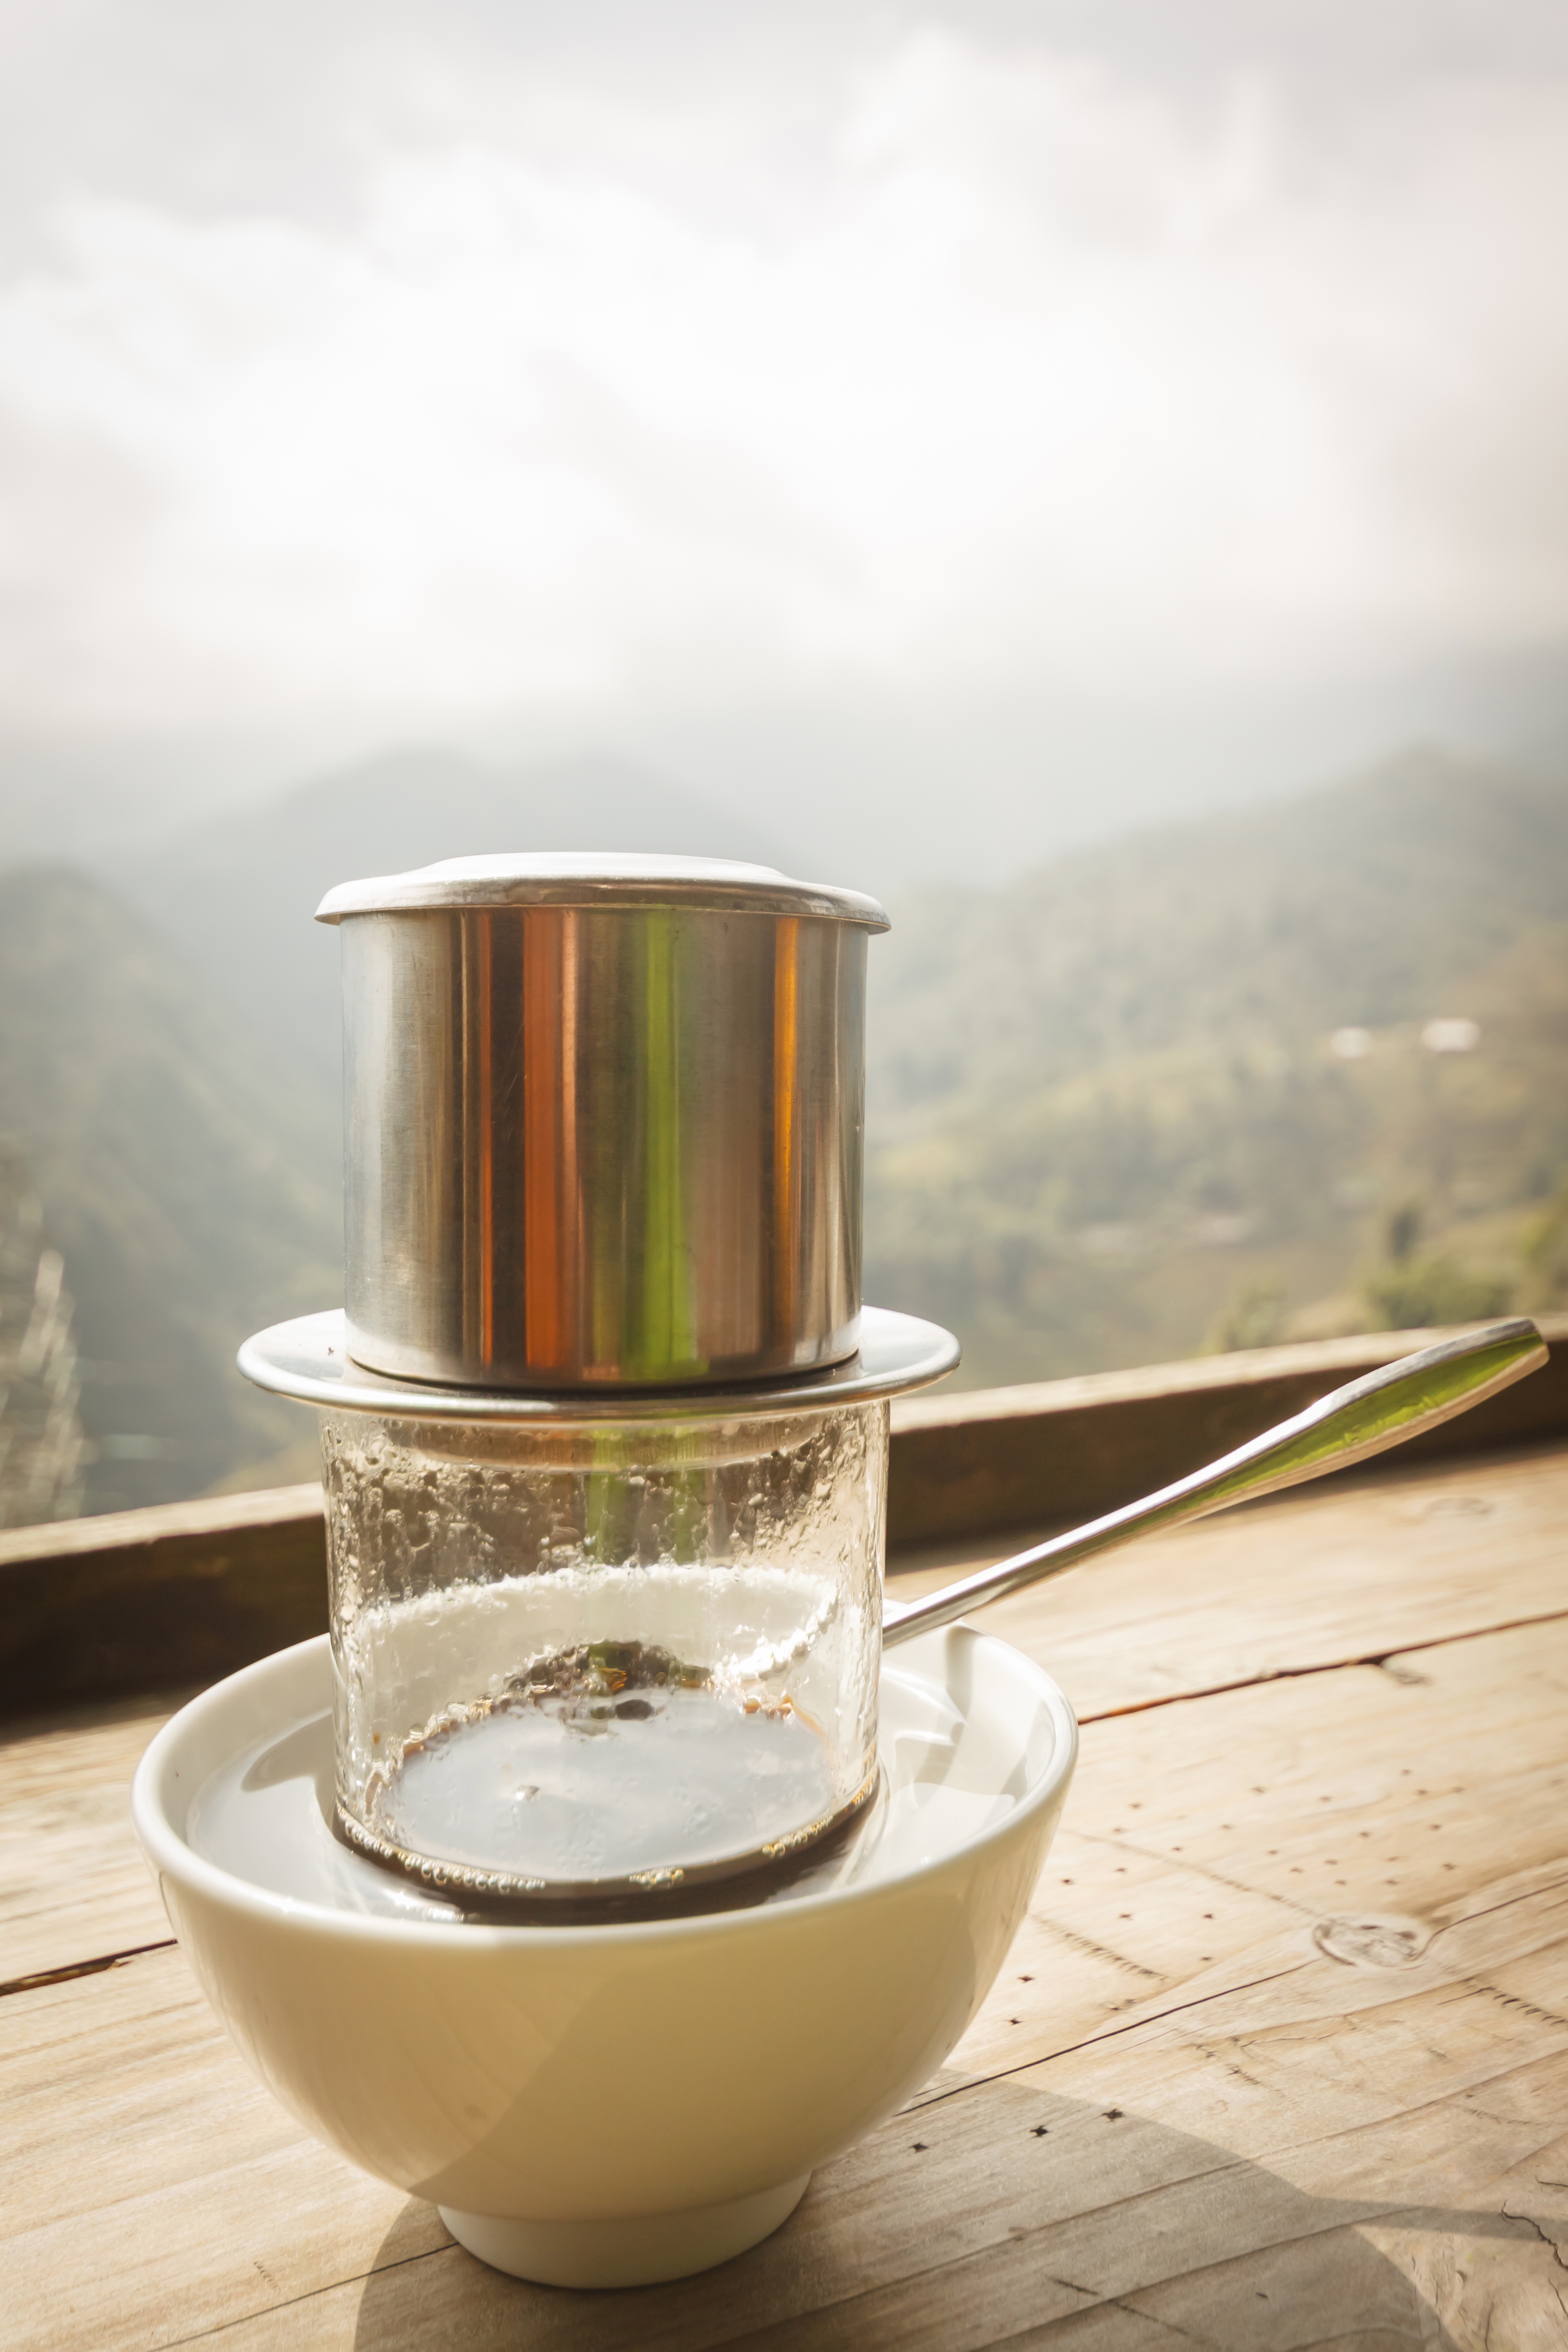 Cà phê (Vietnamesischer Kaffee)